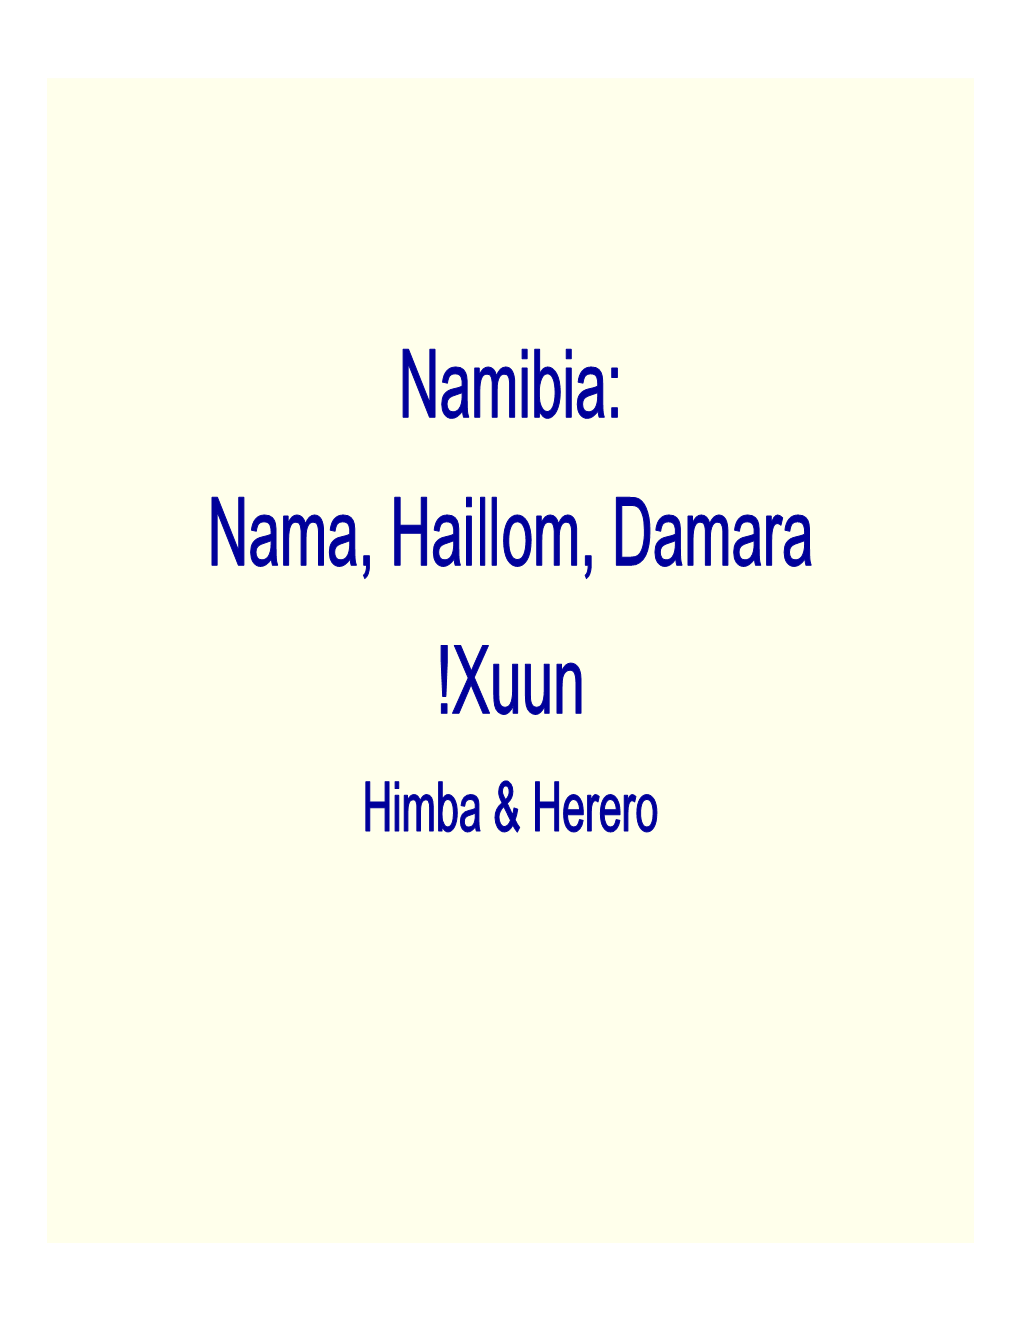 Namibia: Nama, Haiǁom, Damara !Xuun Himba & Herero